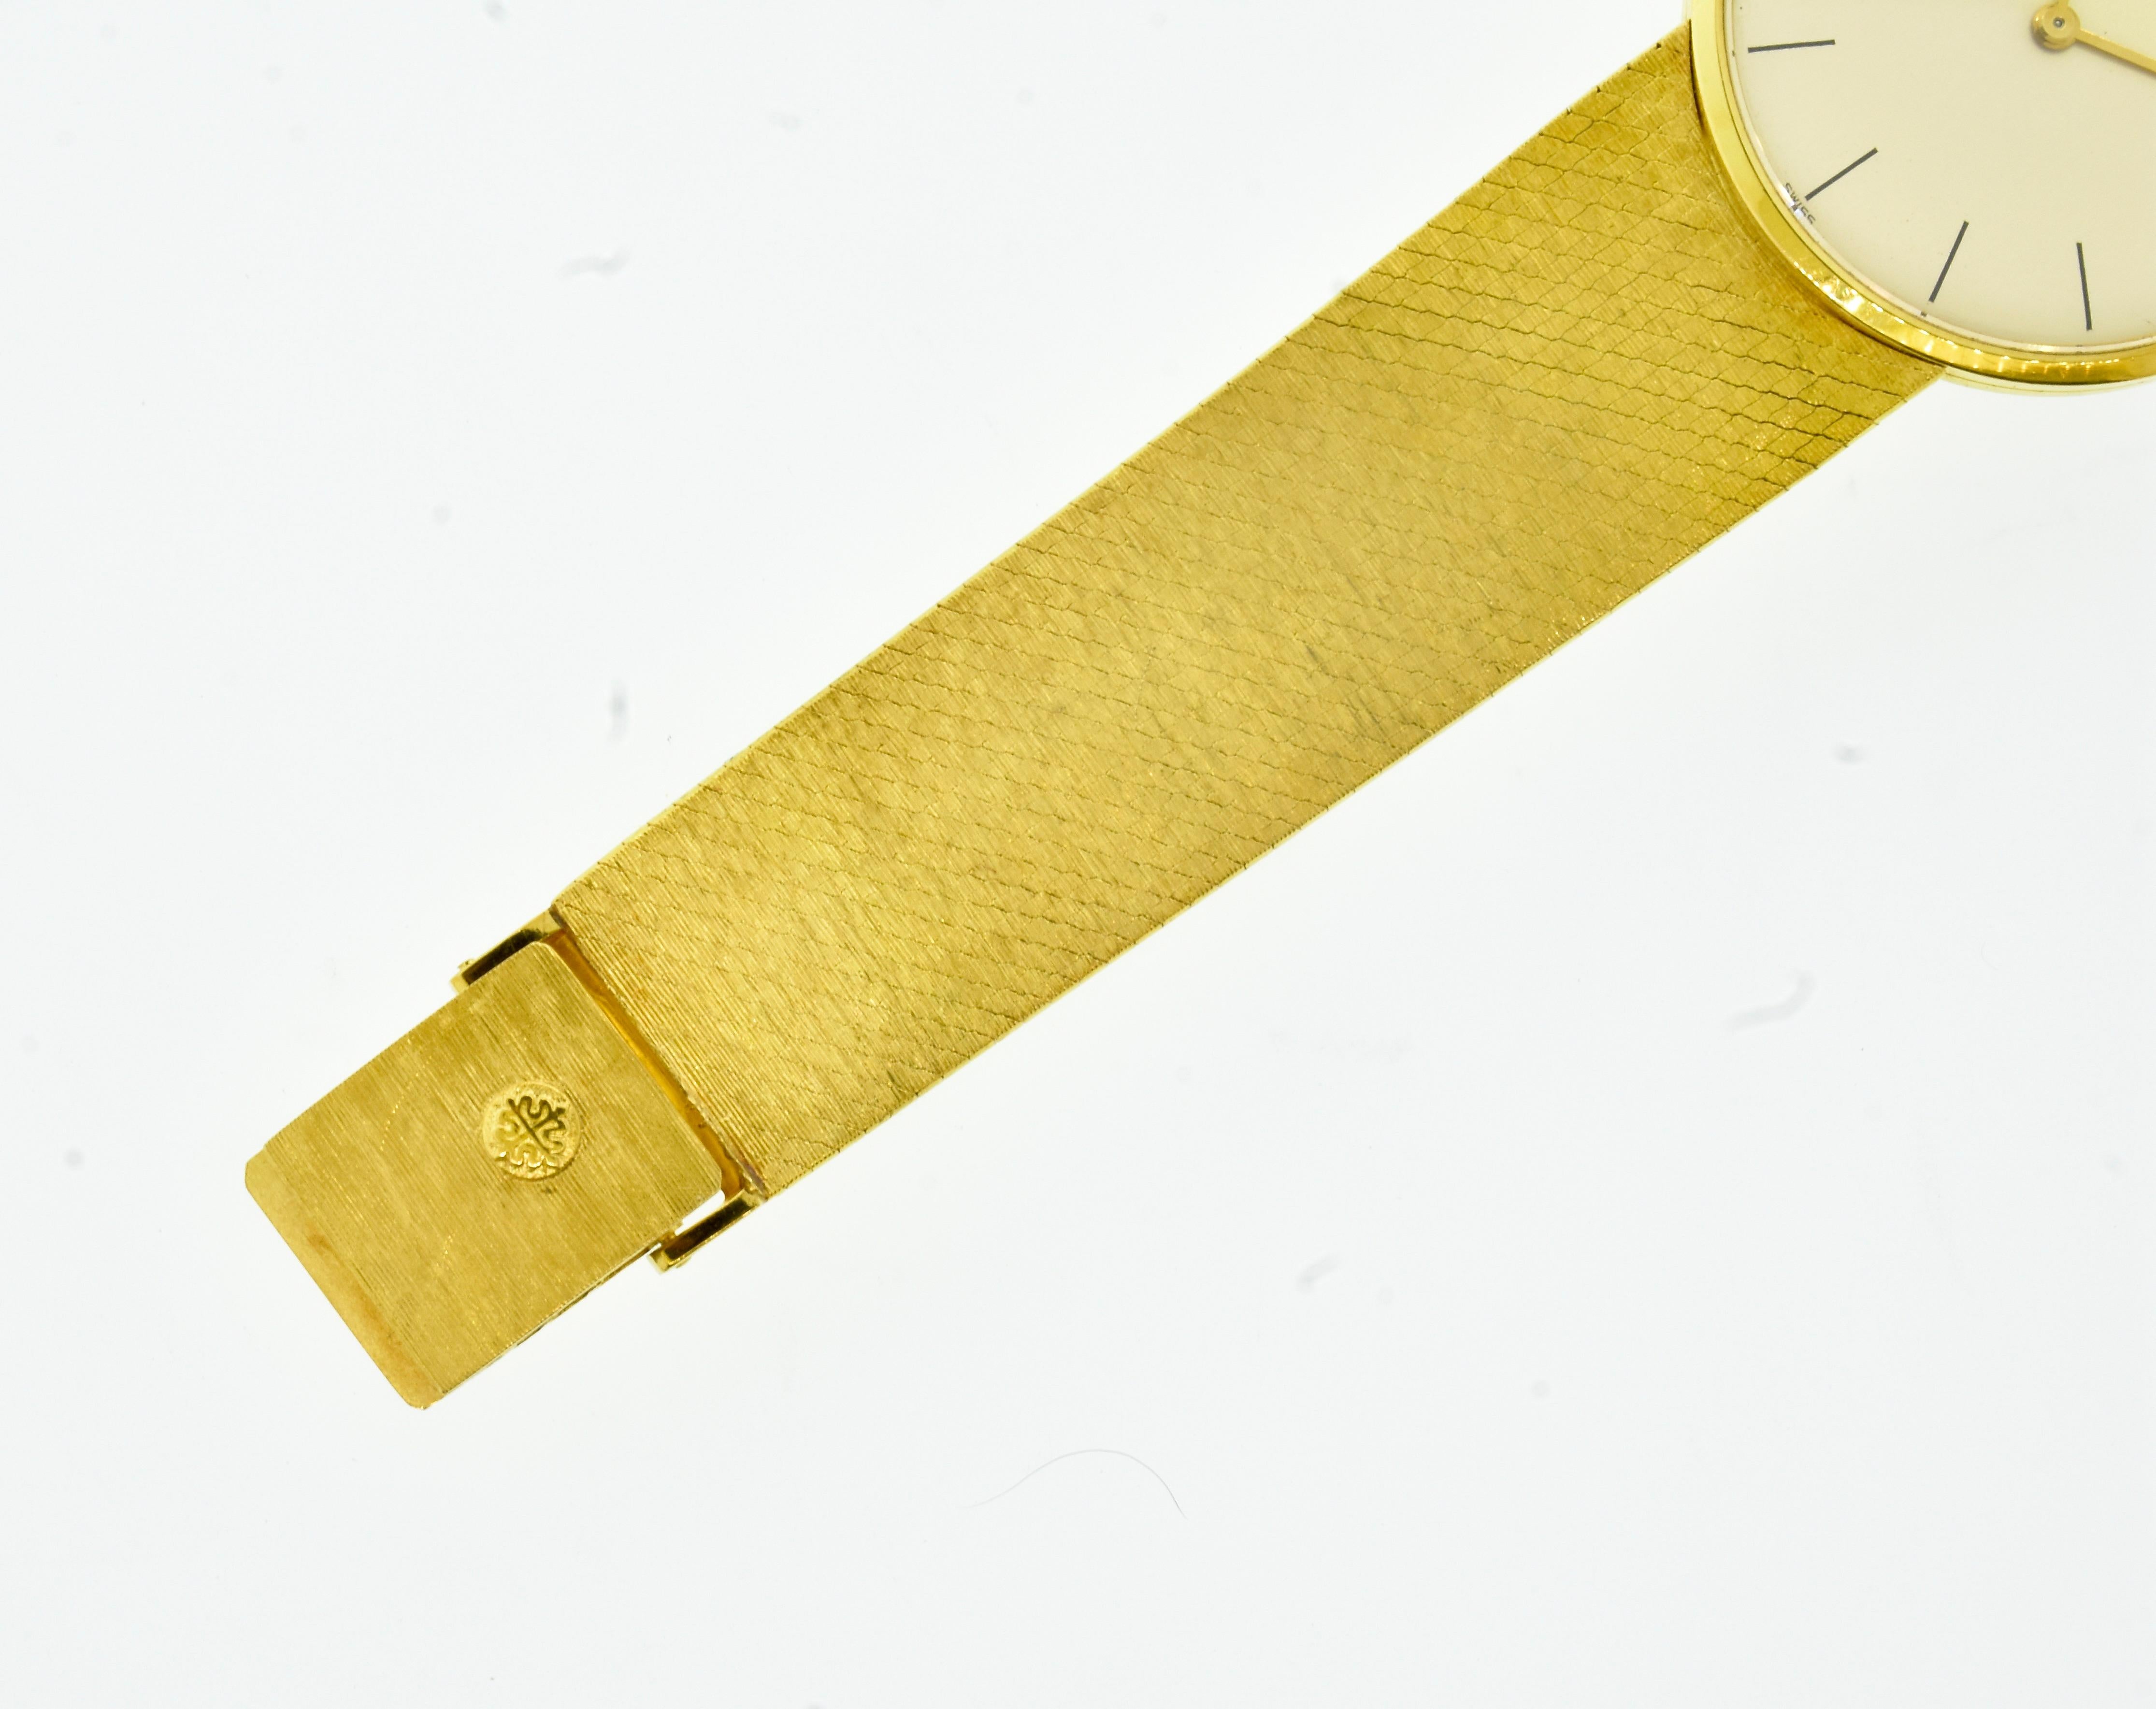 Patek Philippe Calatrava 18K with original gold strap, Vintage, c. 1960 4